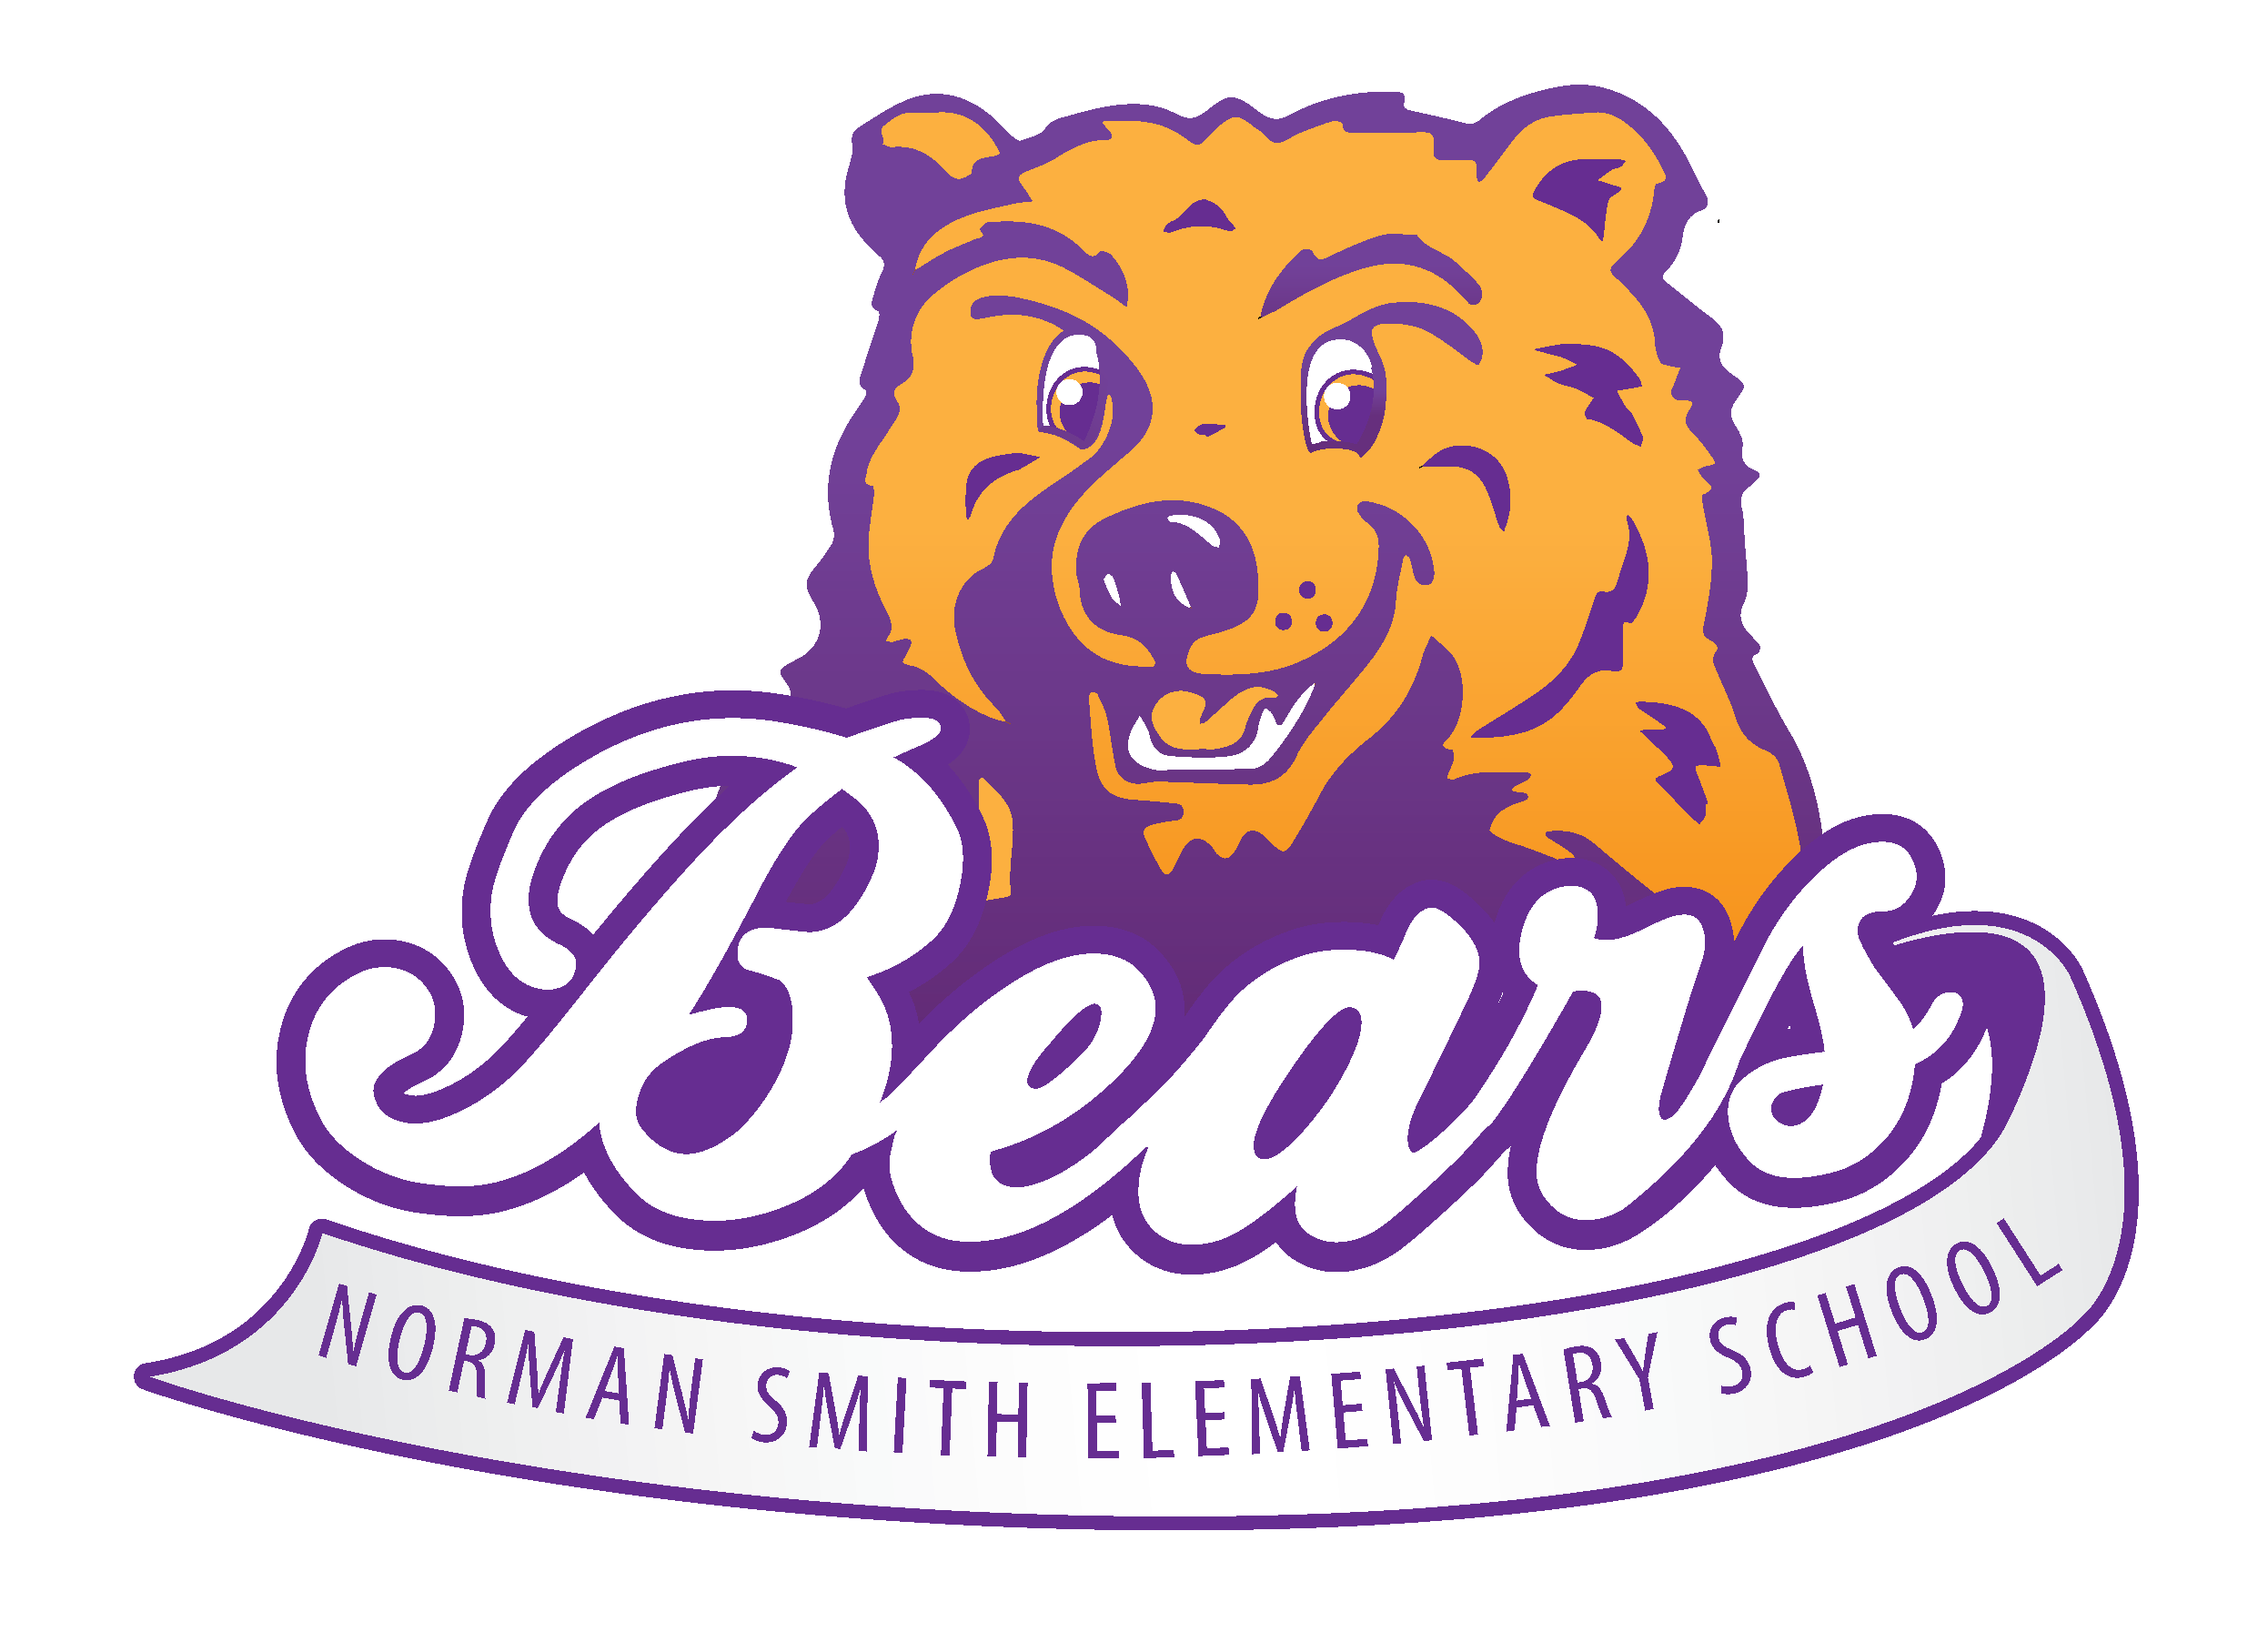 Norman Smith Elementary School Logo